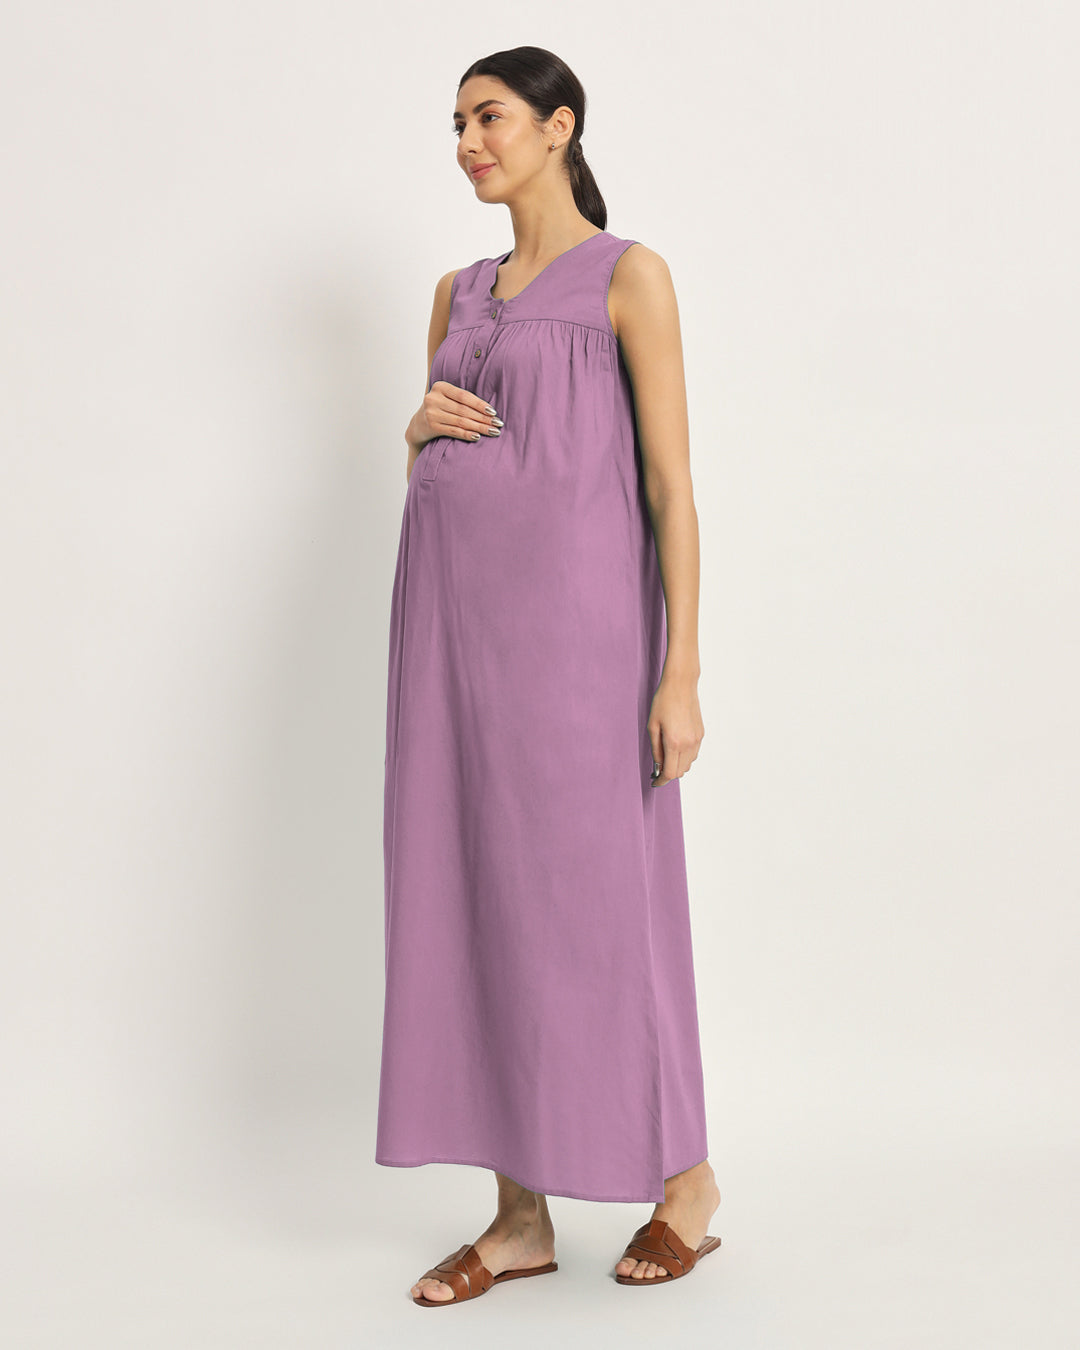 Iris Pink Mommylicious Maternity & Nursing Dress